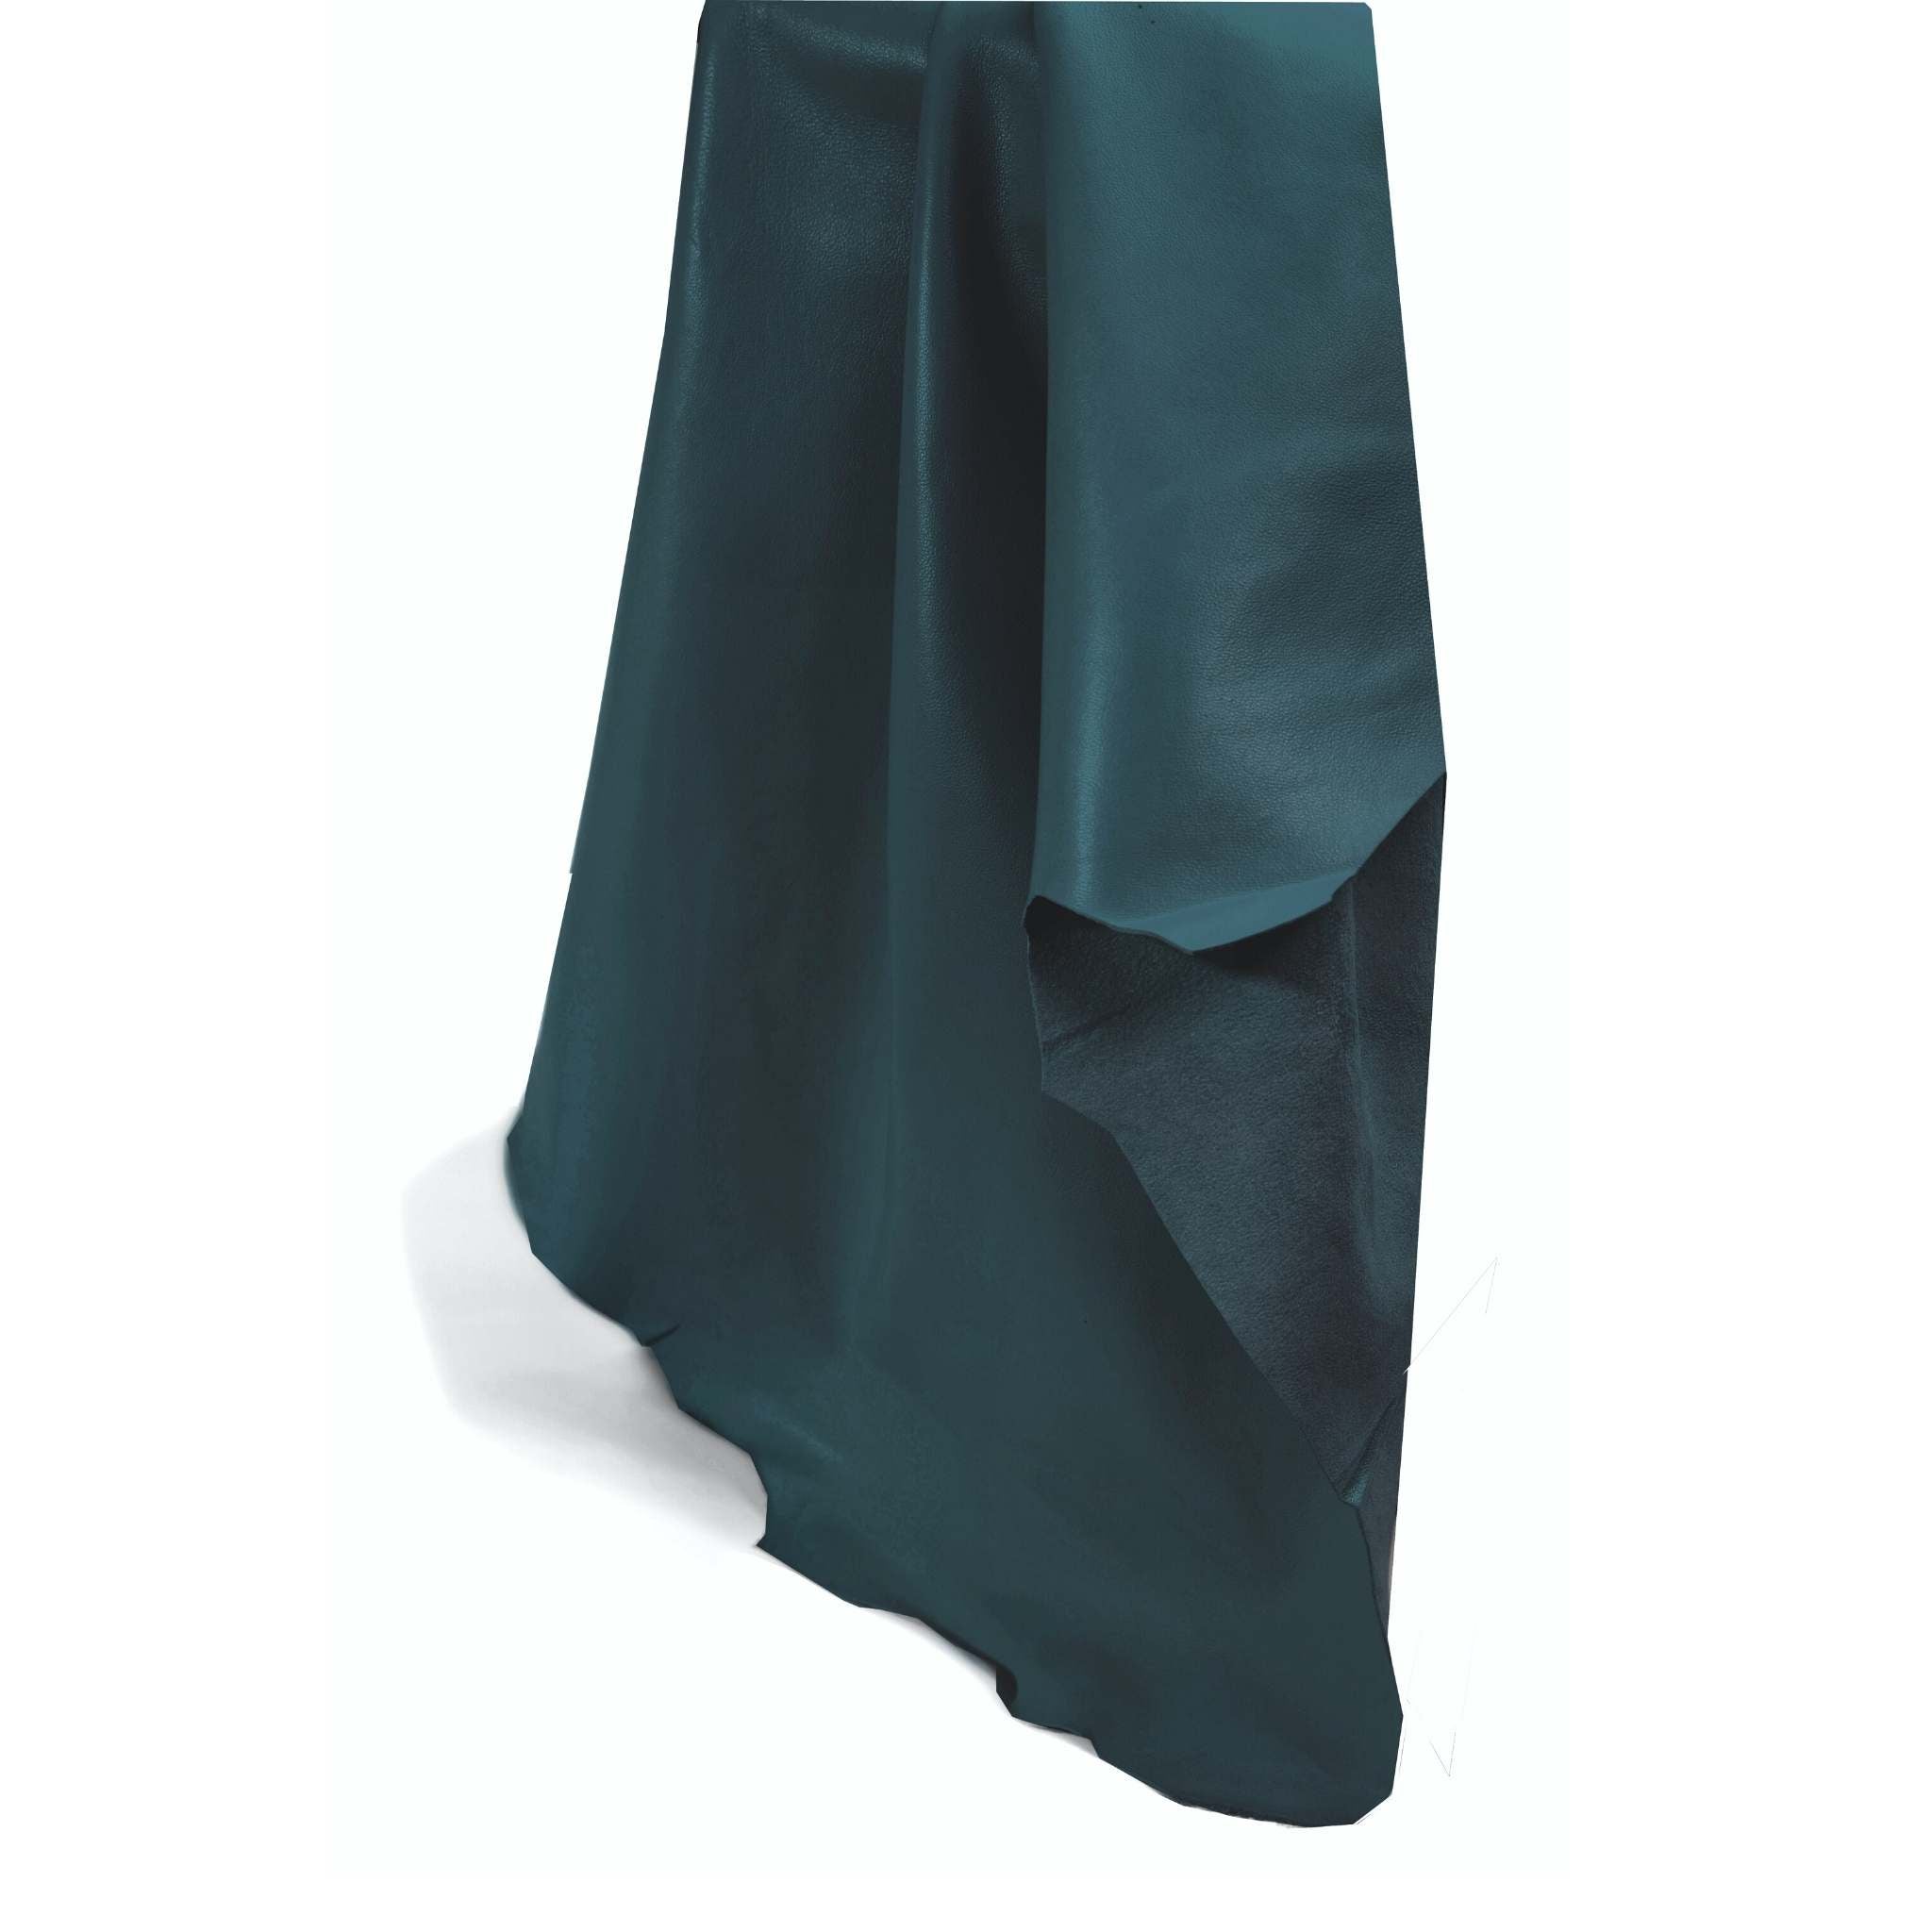 Deep ocean blue sheepskin soft drape leather ideal for garment making